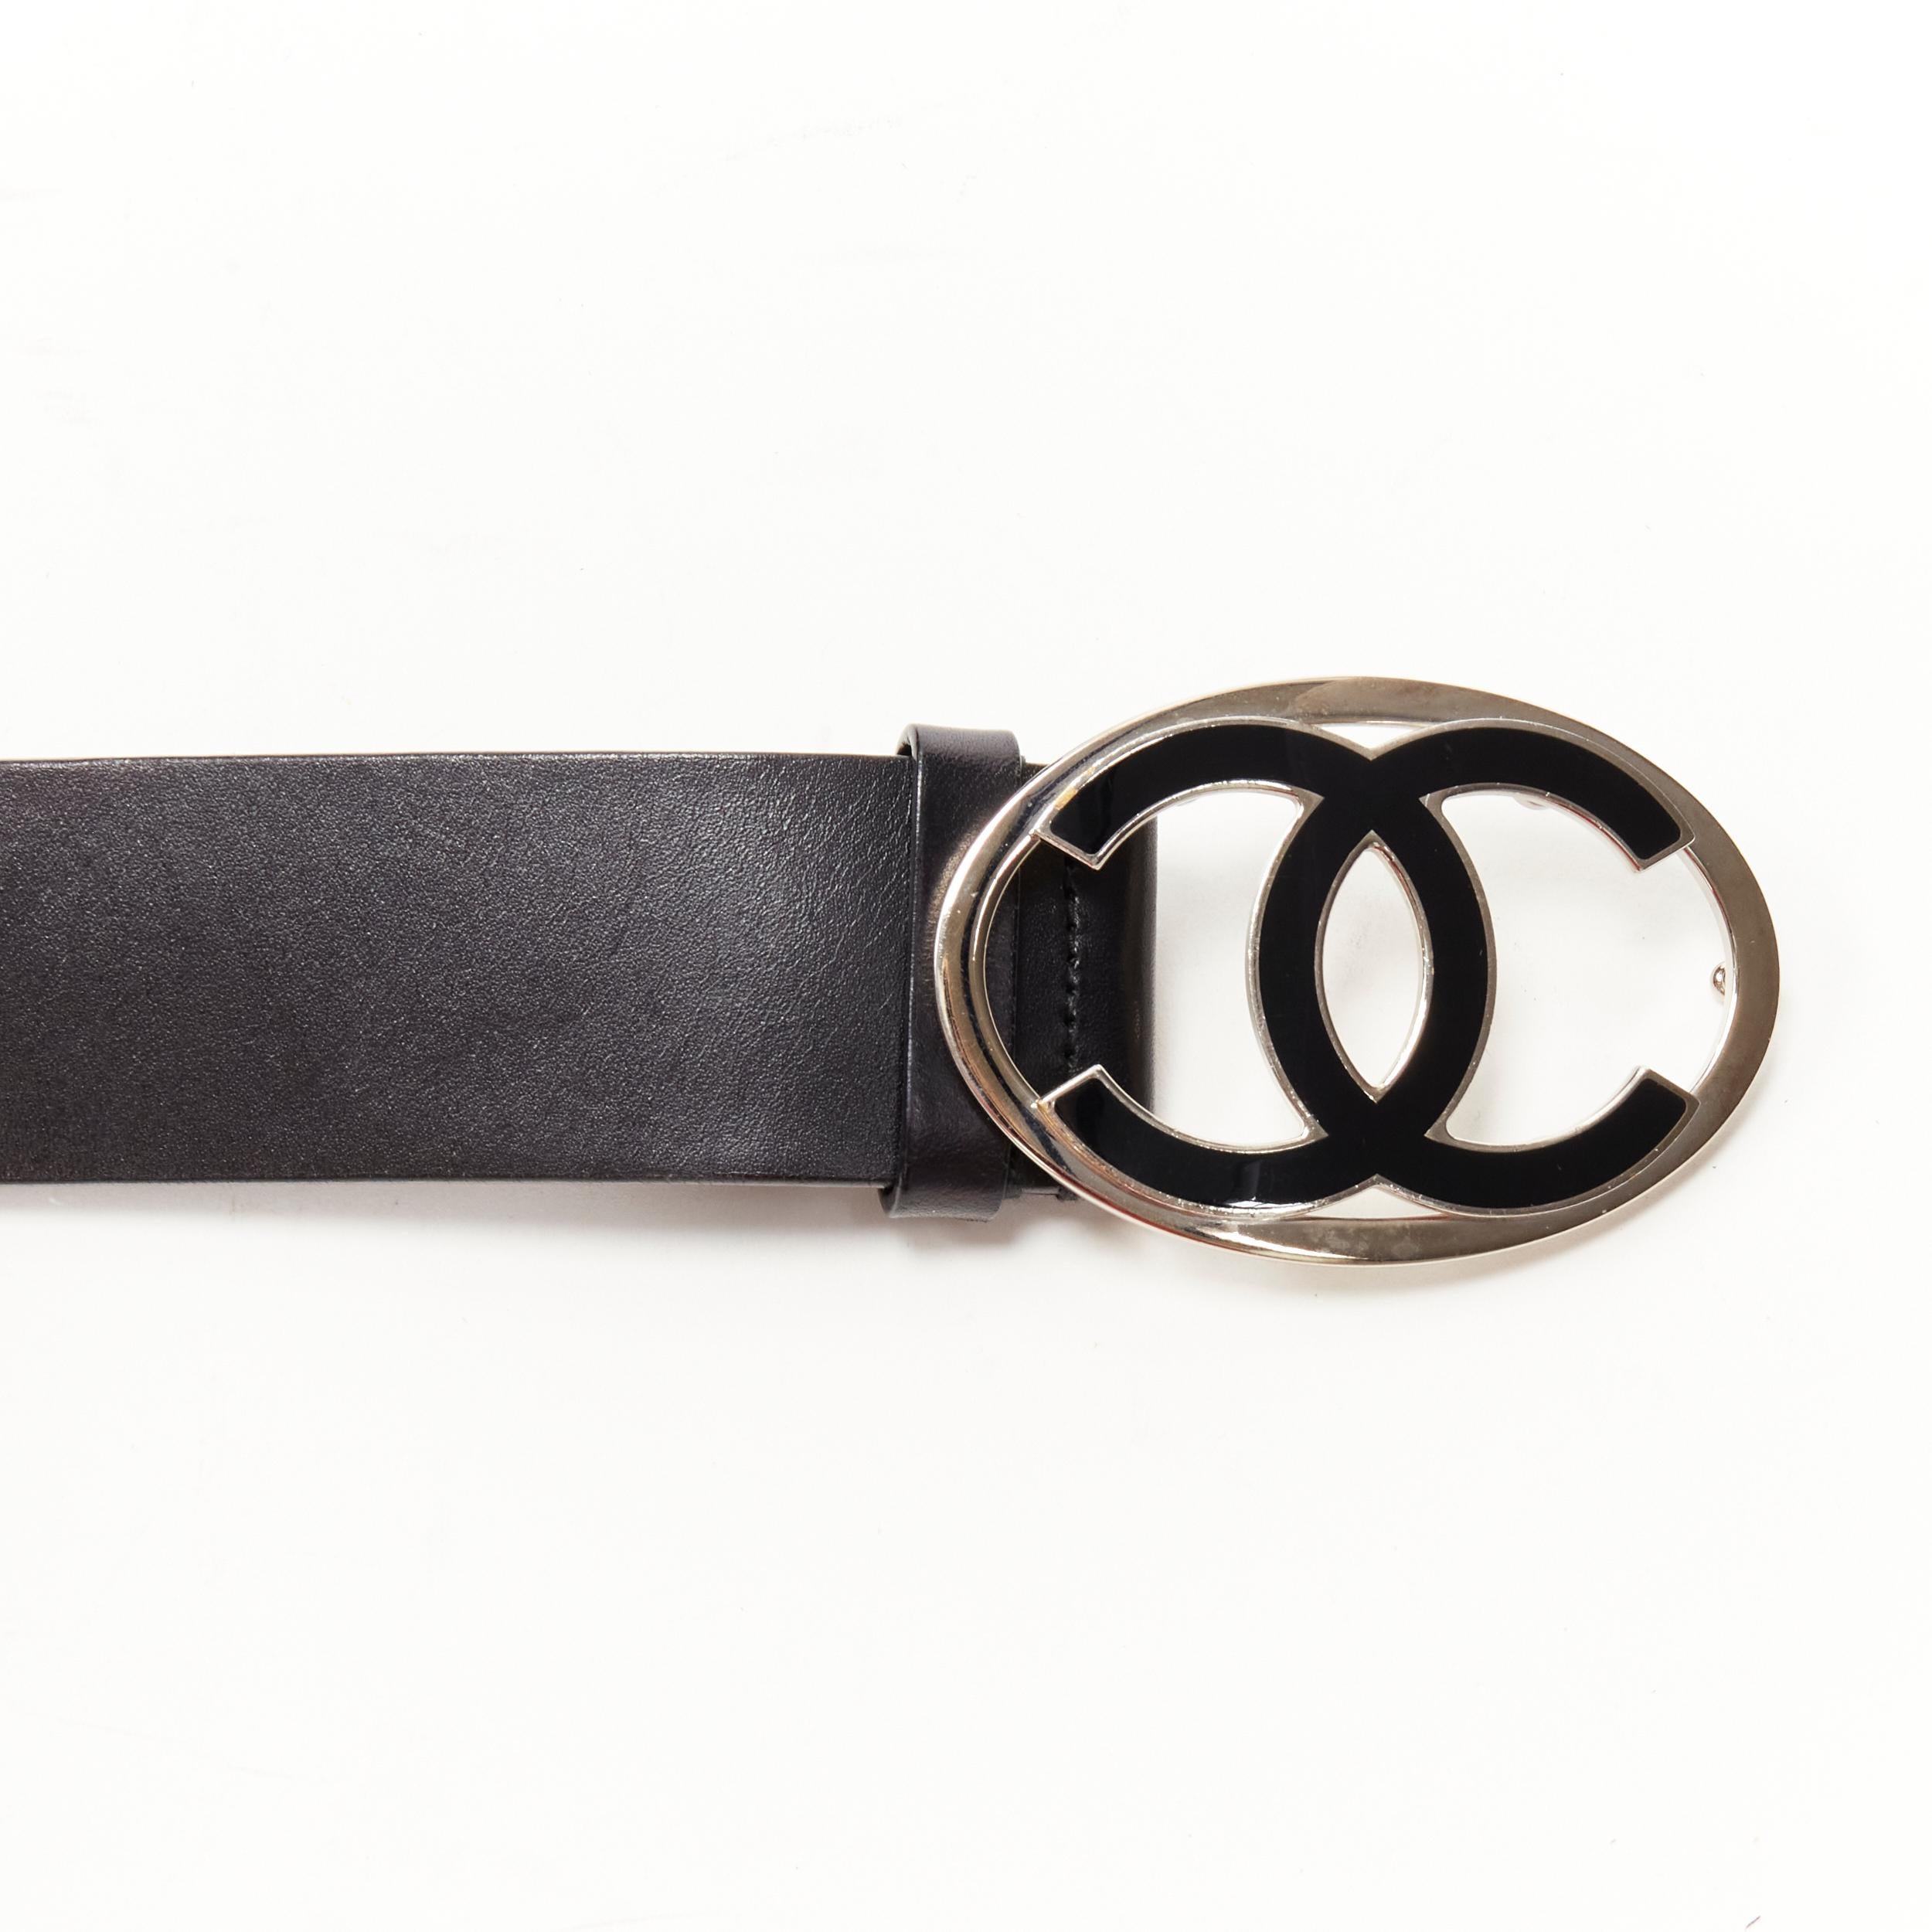 CHANEL CC black silver logo oval buckle leather belt 90cm 35